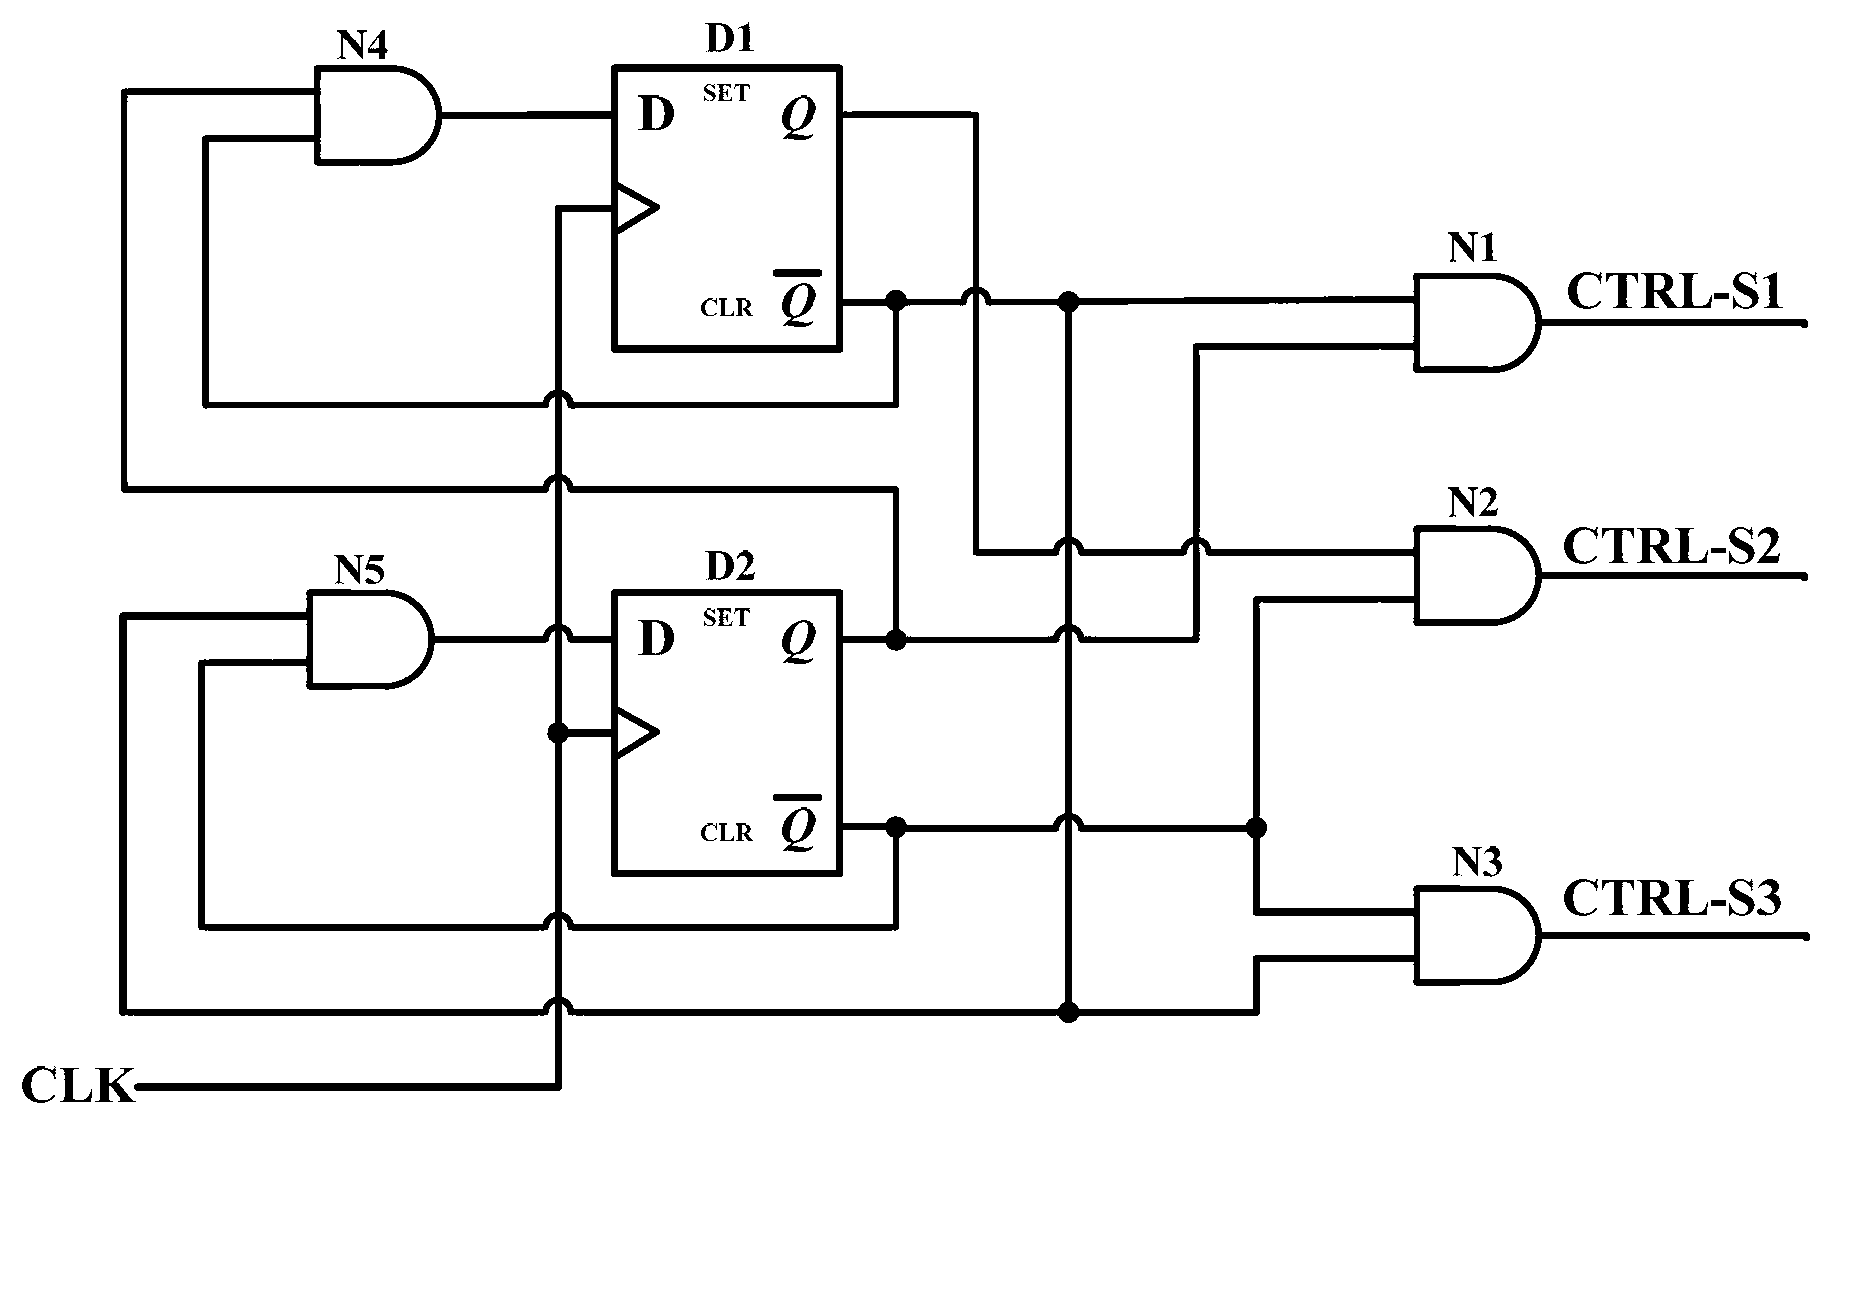 Analog-digital conversion circuit based on memristor